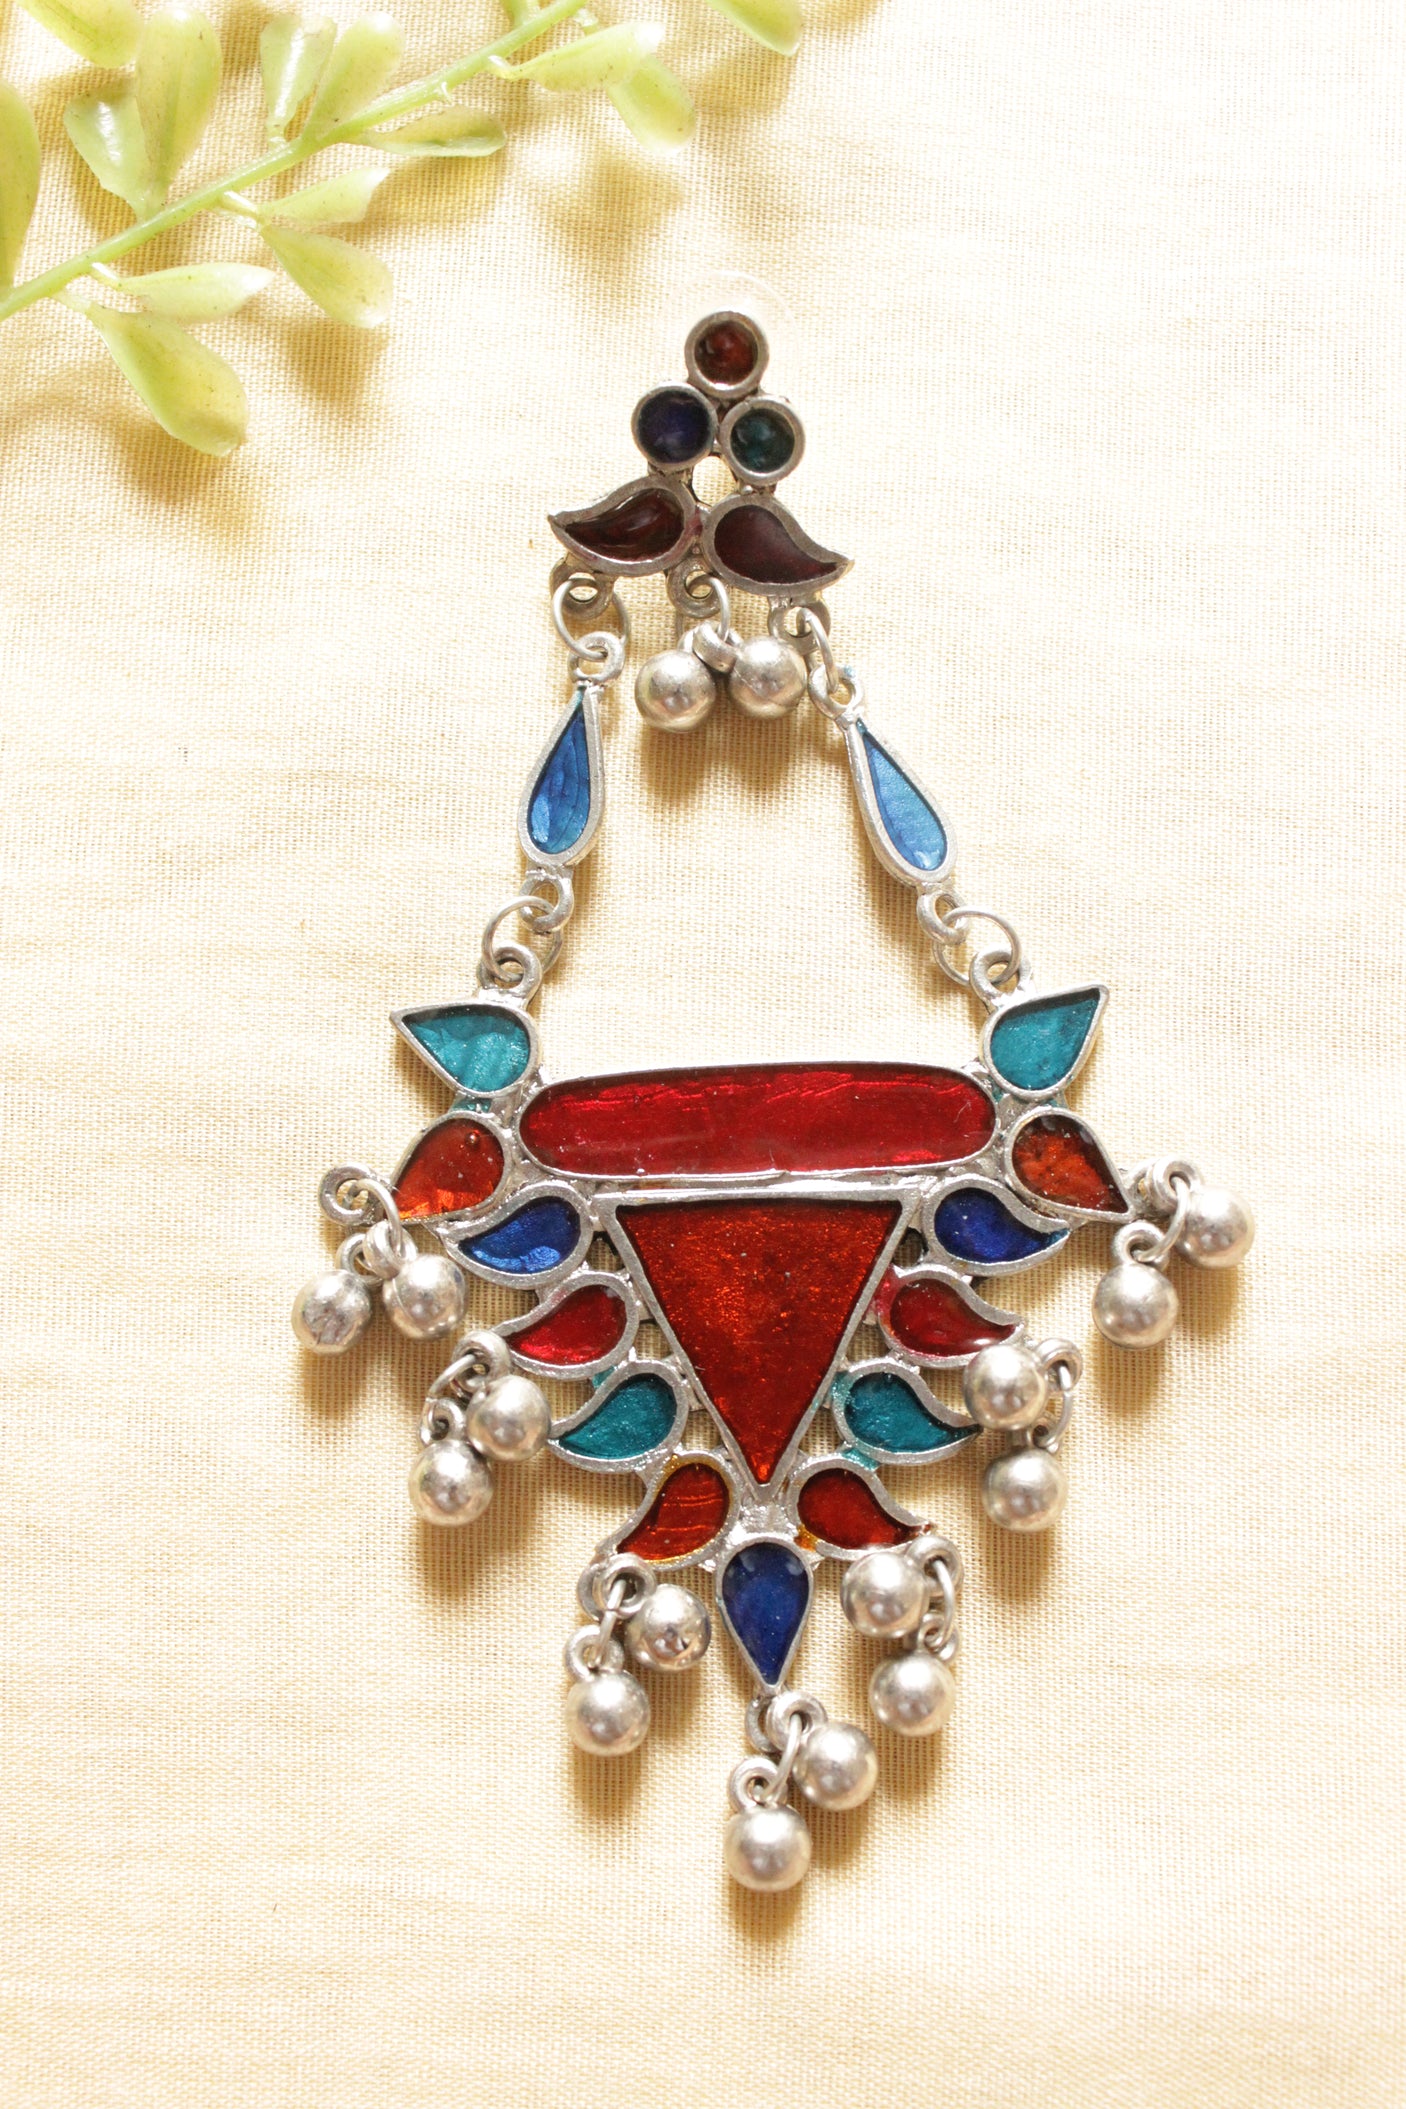 Red & Blue Enamel Painted Afghani Earrings with Metal Bead Charms